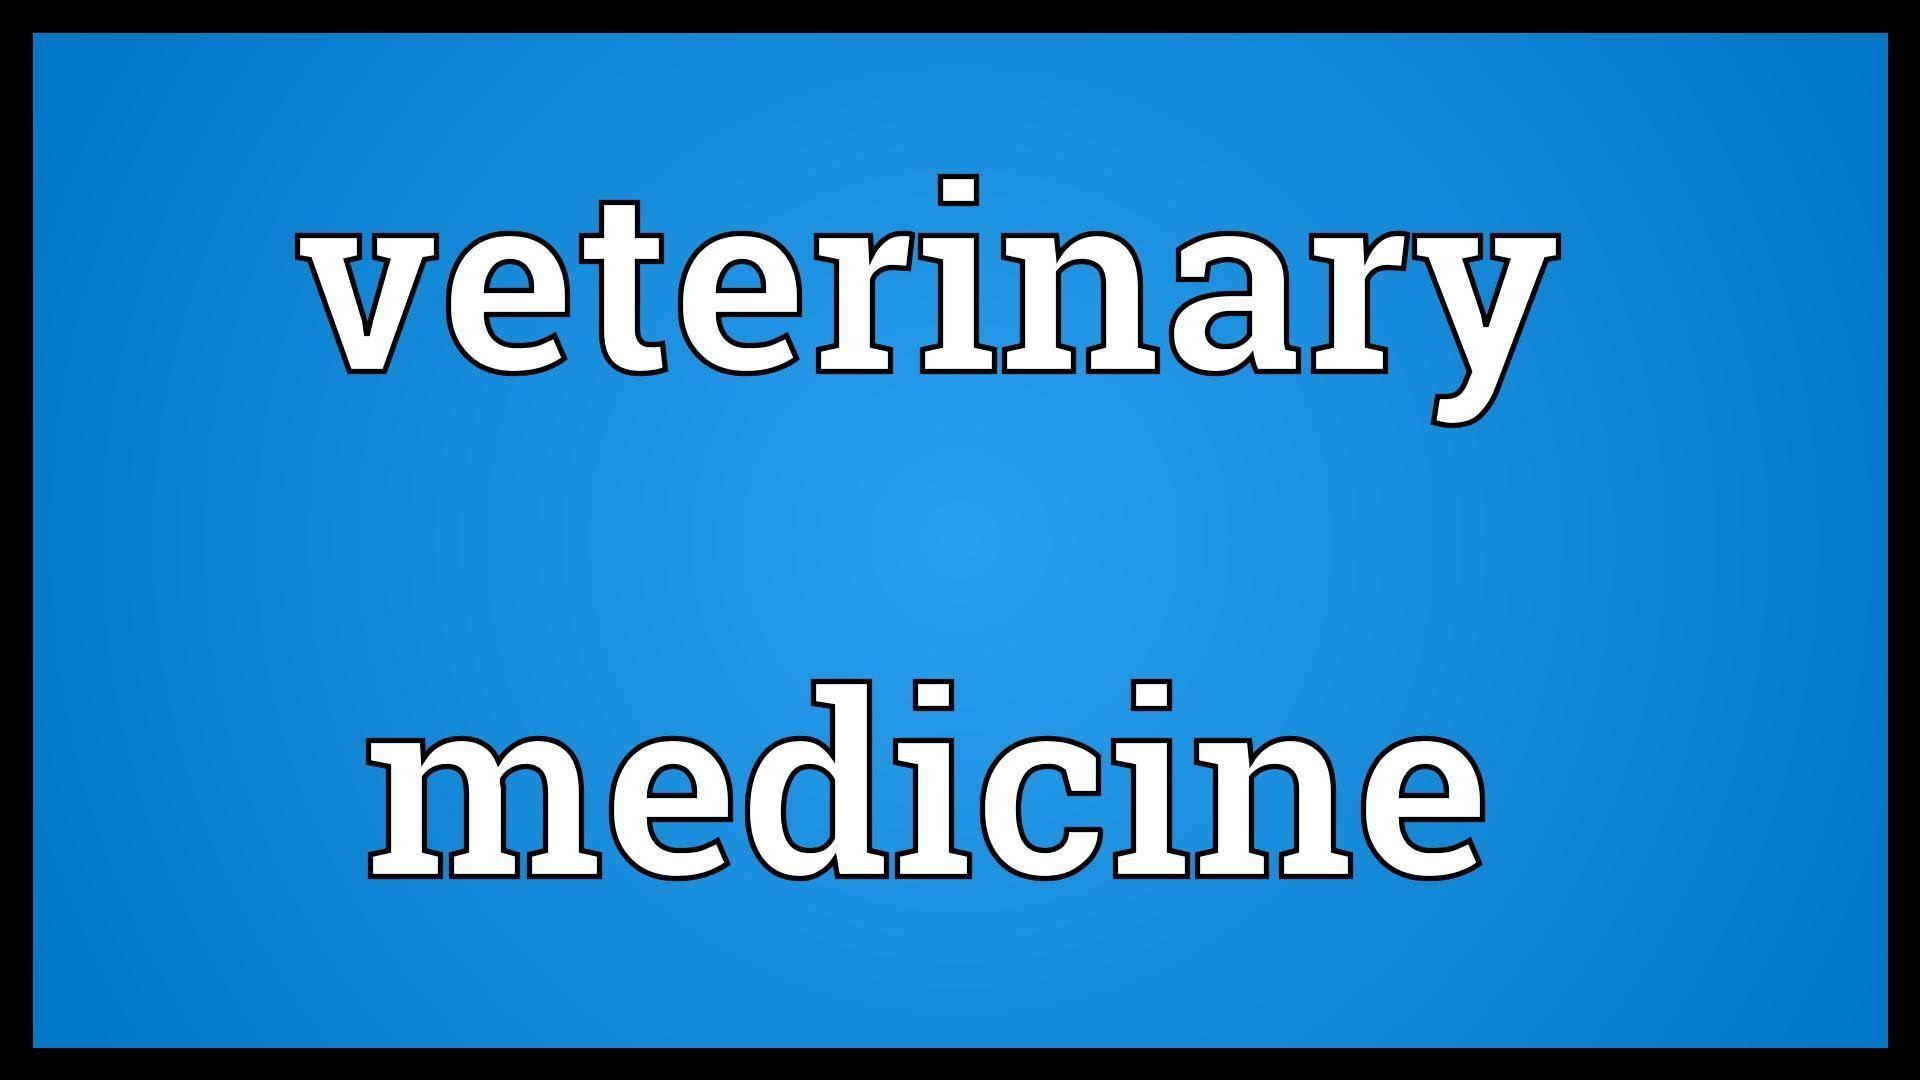 Veterinary medicine Meaning